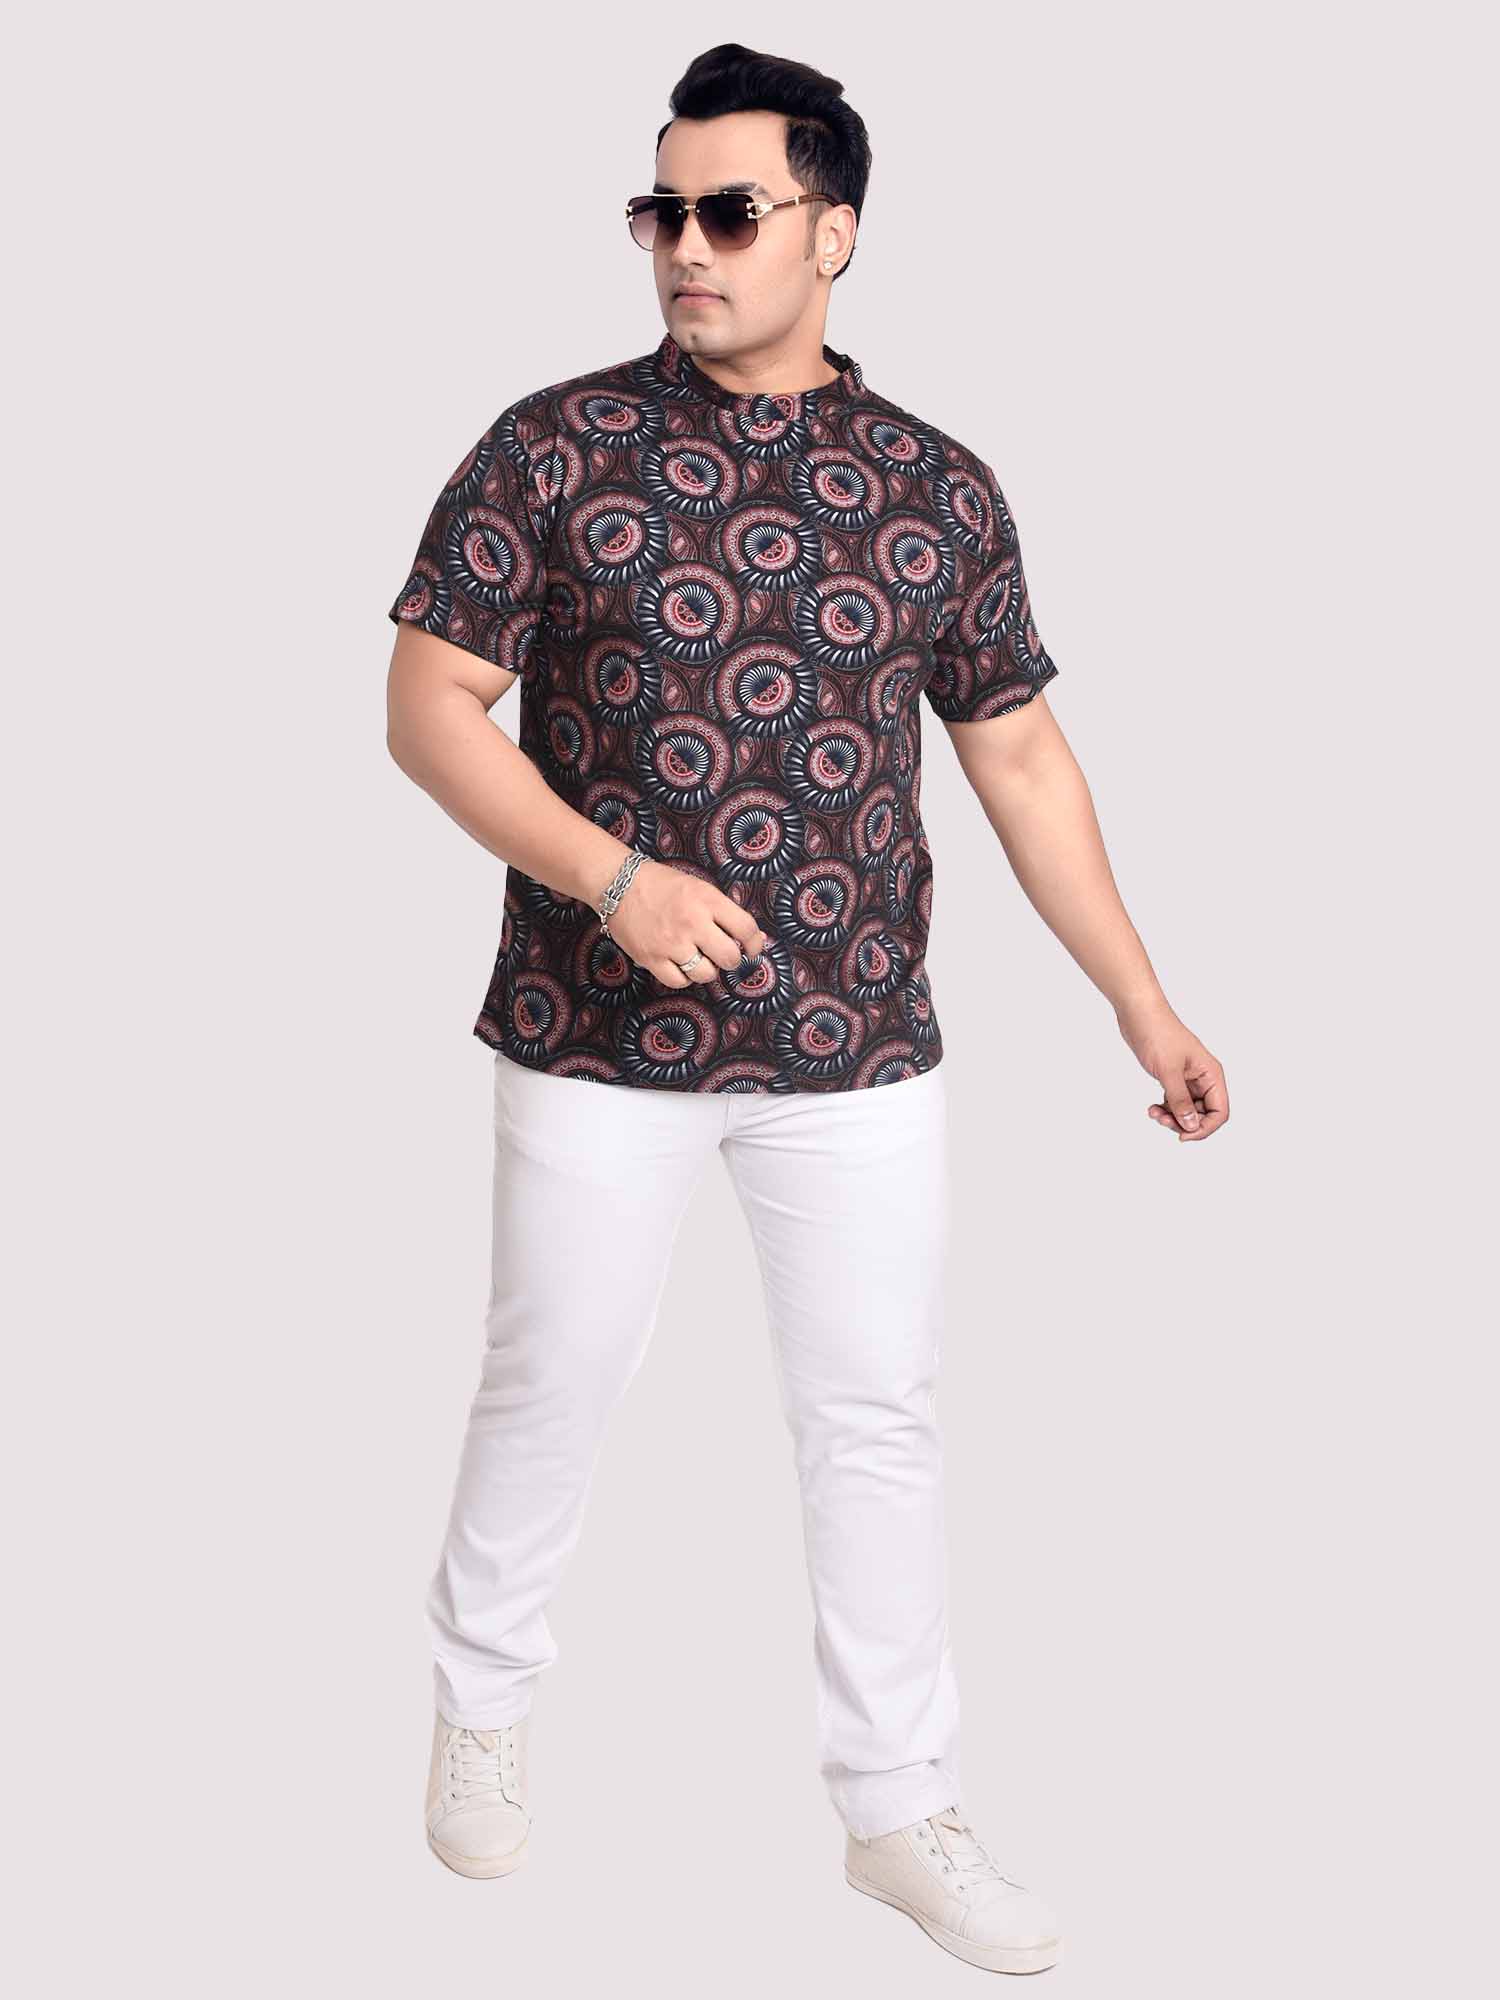 Ajrakh Digital Printed Round Neck T-Shirt Men's Plus Size